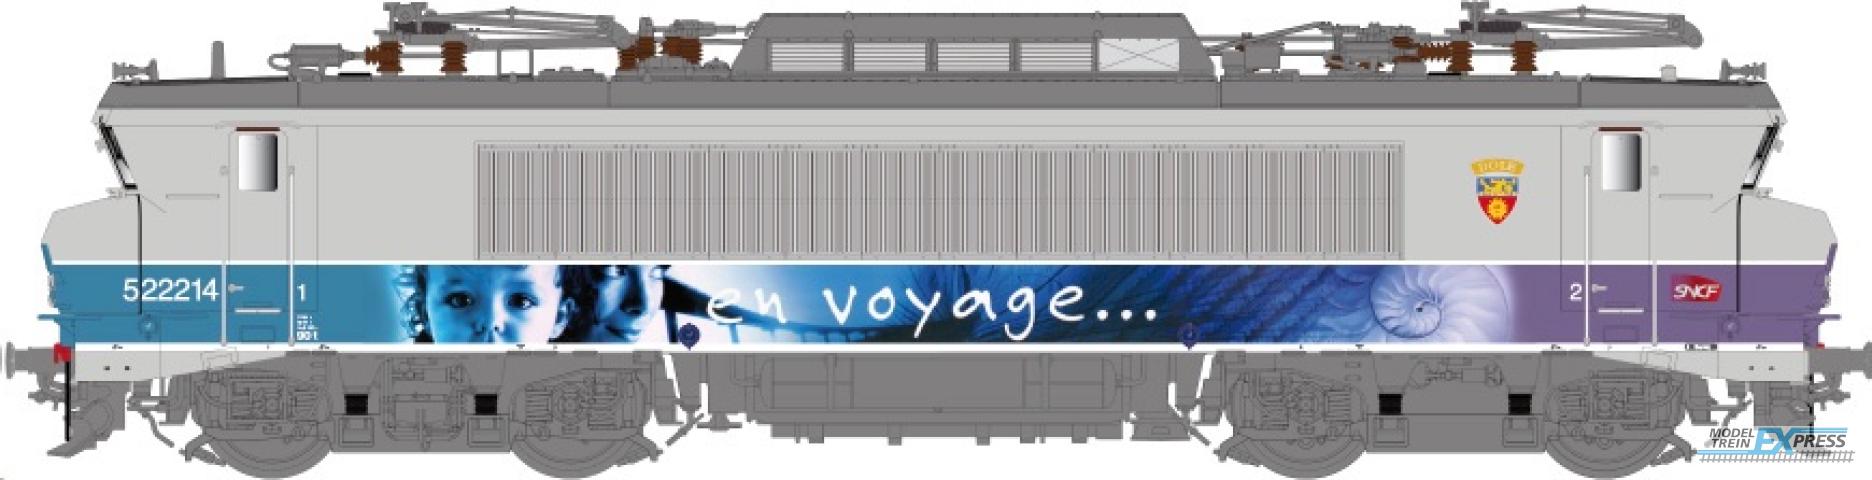 LS Models 10055S BB 22200, grijs/paars, En Voyage, carmillon logo, front nummer, kleine cabine, blazoen Dole  /  Ep. V-VI  /  SNCF  /  HO  /  DC SOUND  /  1 P.